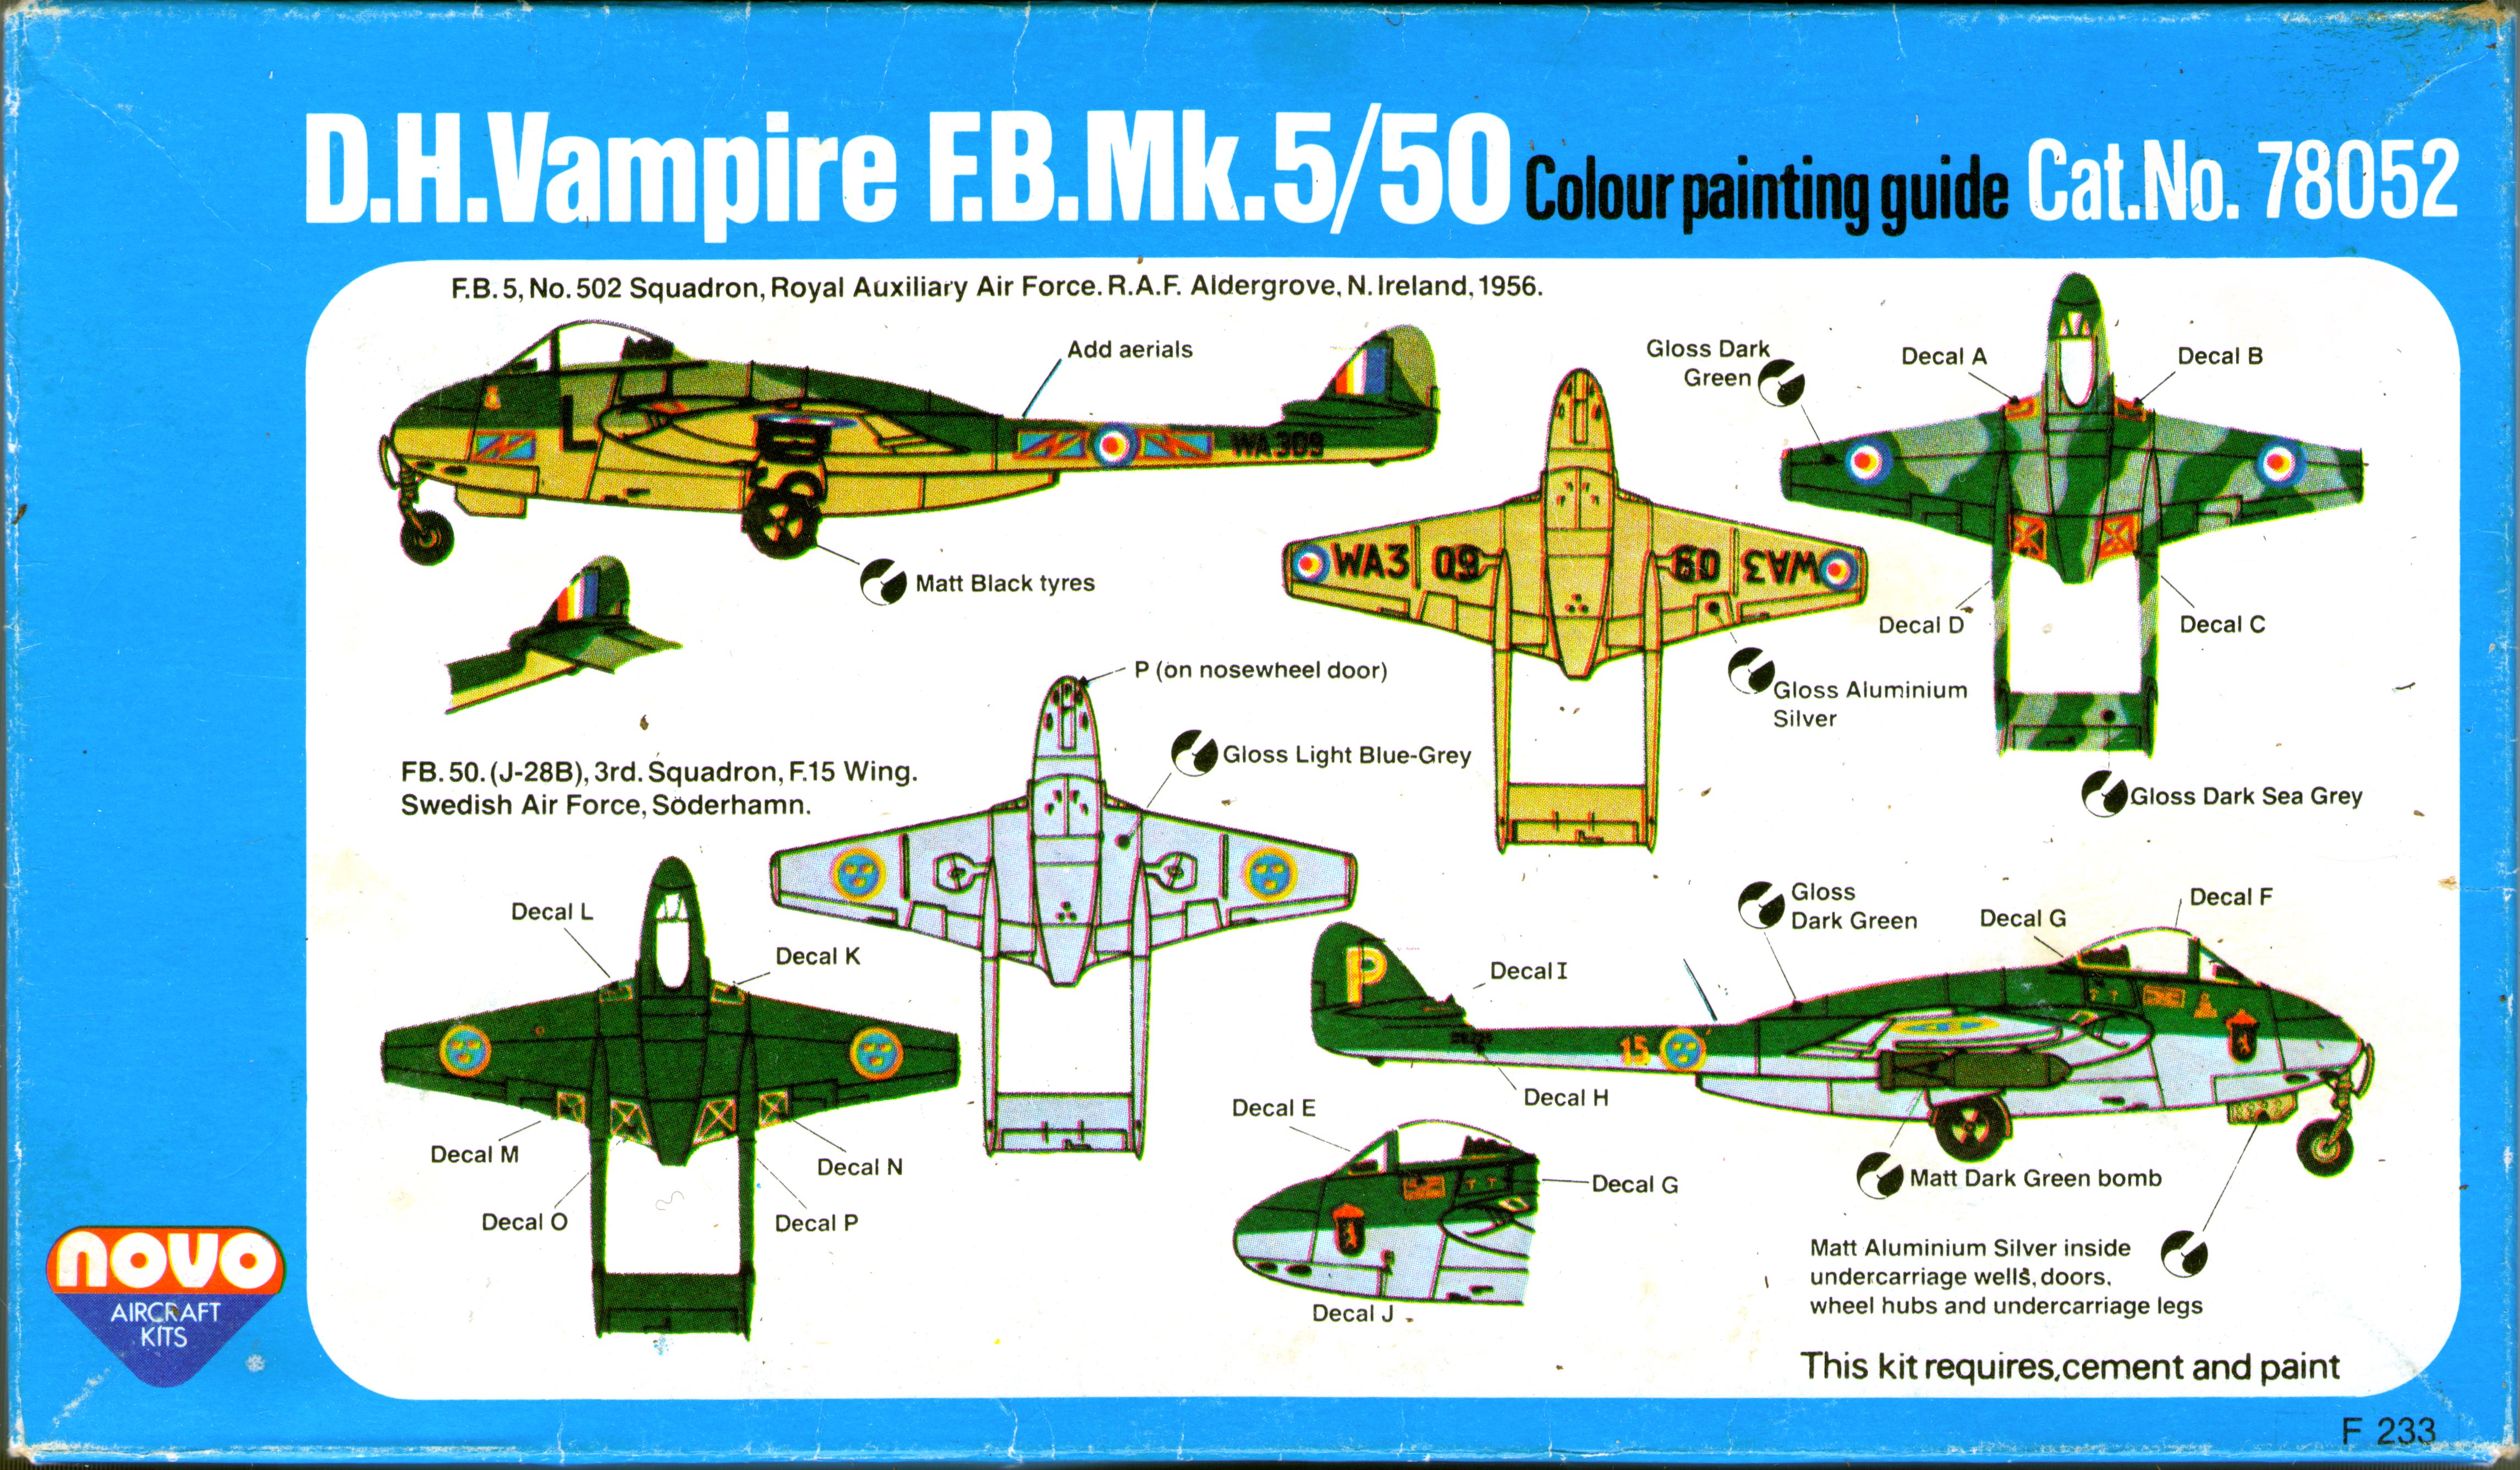 Схема окраски и маркировки NOVO F217 D.H. Vampire, 1978, светлый картон